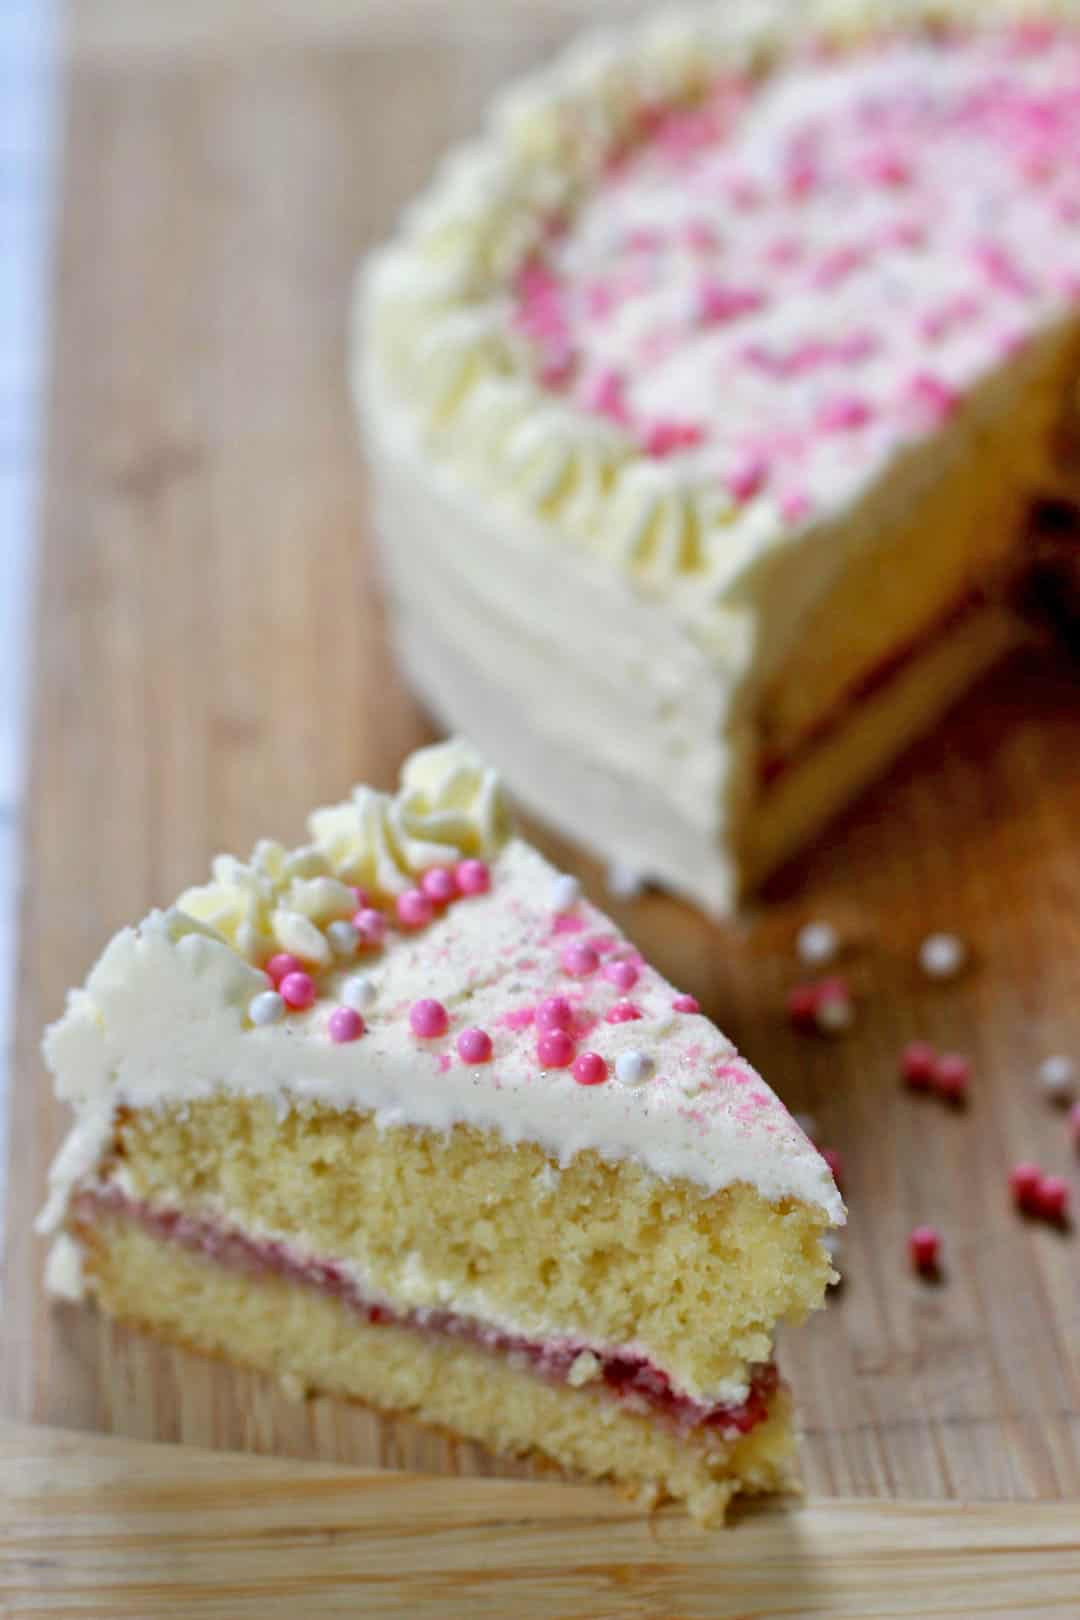 Best ideas about Vanilla Birthday Cake
. Save or Pin Vanilla Birthday Cake Now.